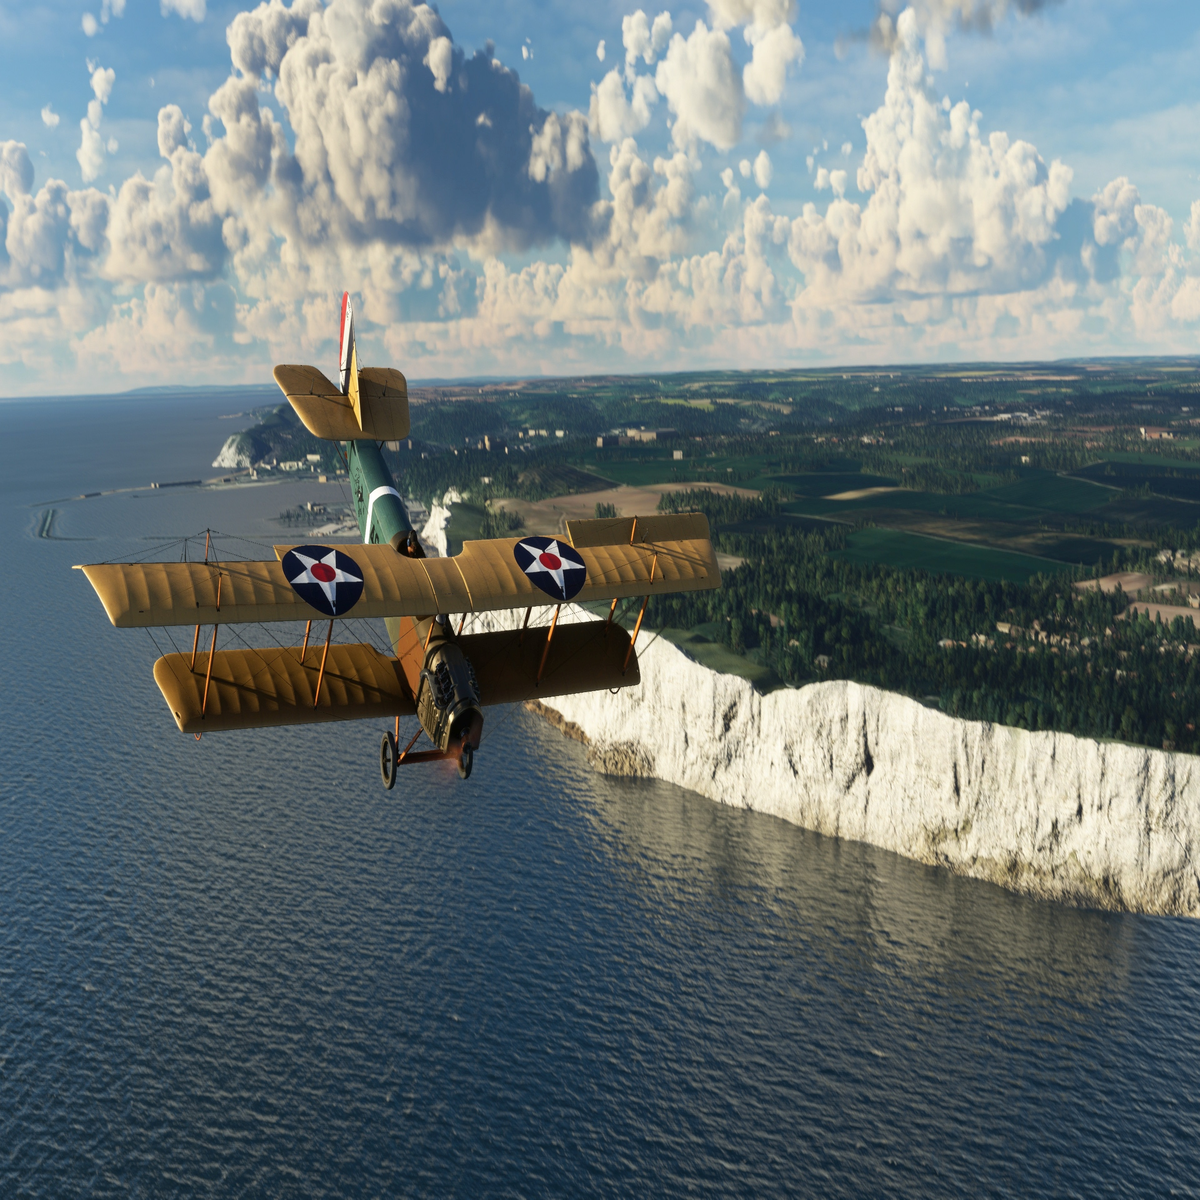 Microsoft Flight Simulator Adding Historical Aircrafts for 40th Anniversary